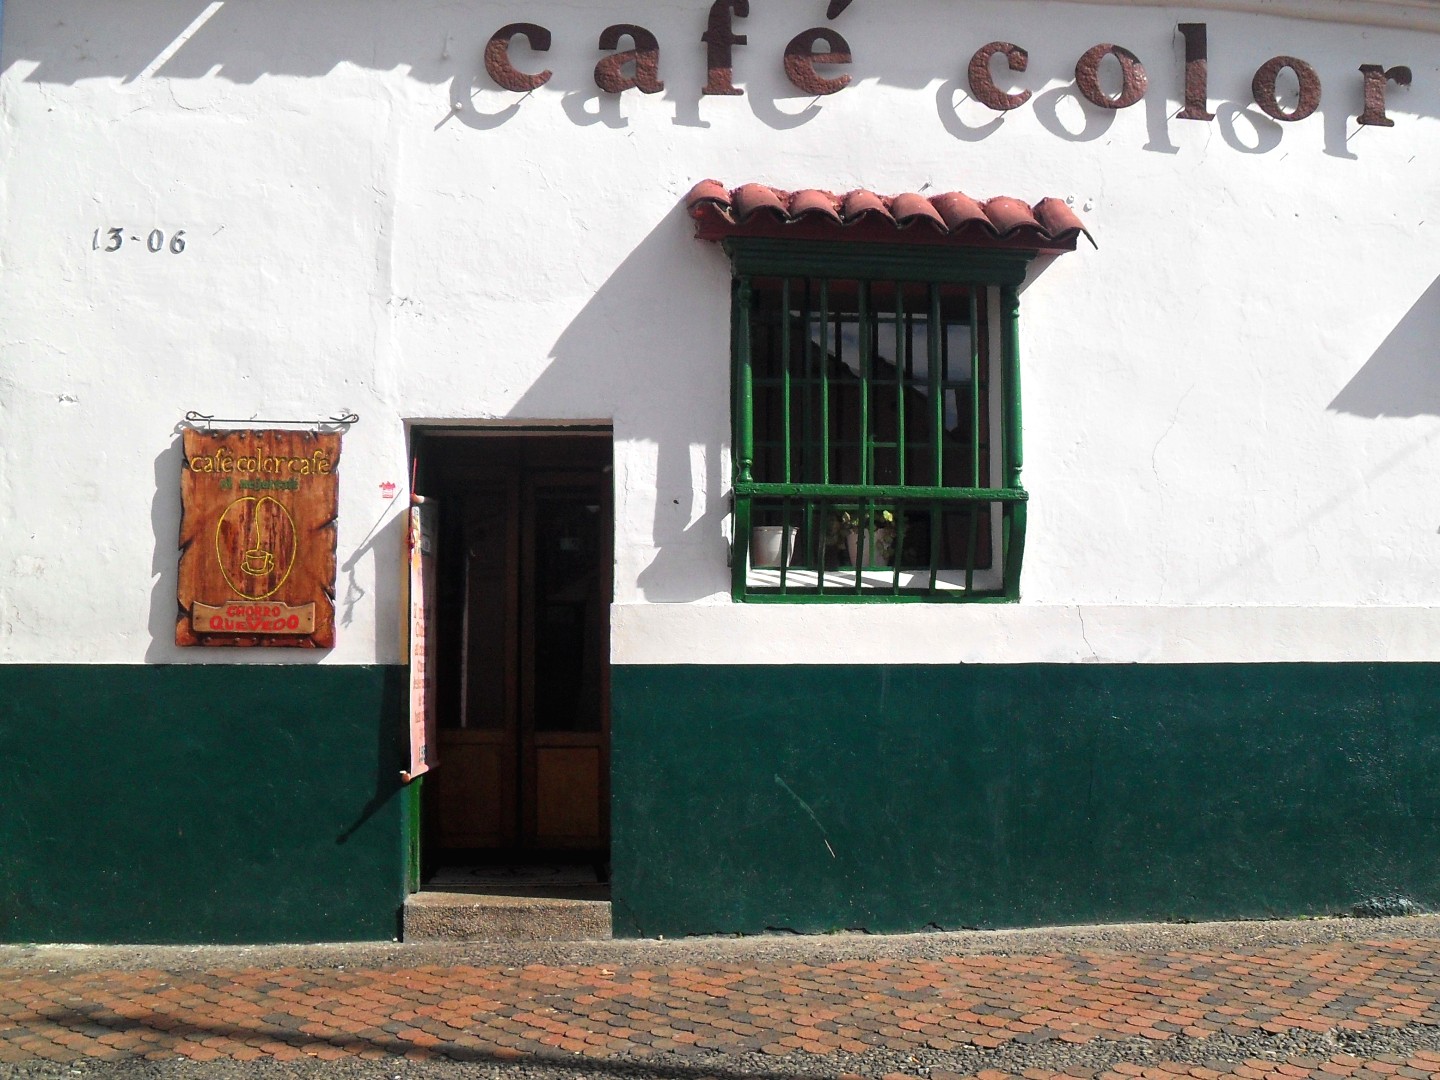 Café Color Café